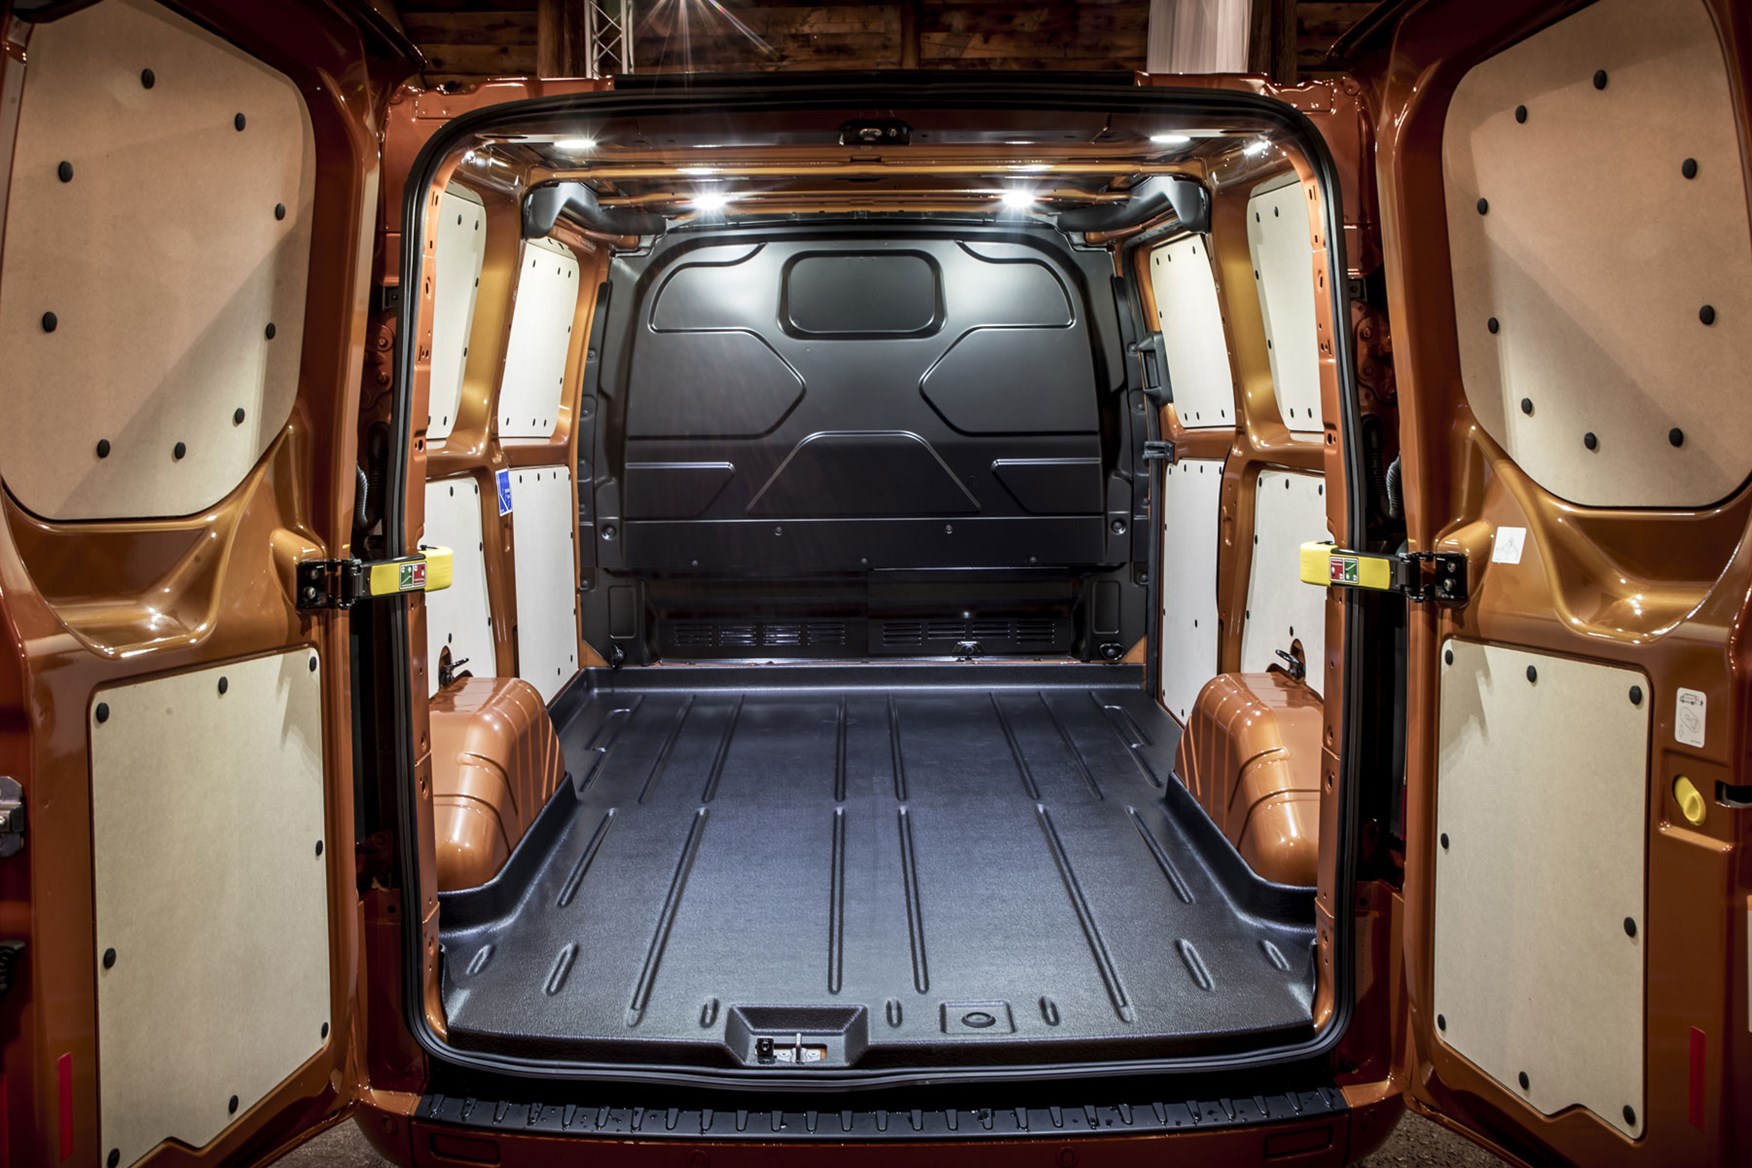 Ford Transit Custom van dimensions, capacity, payload, volume, towing